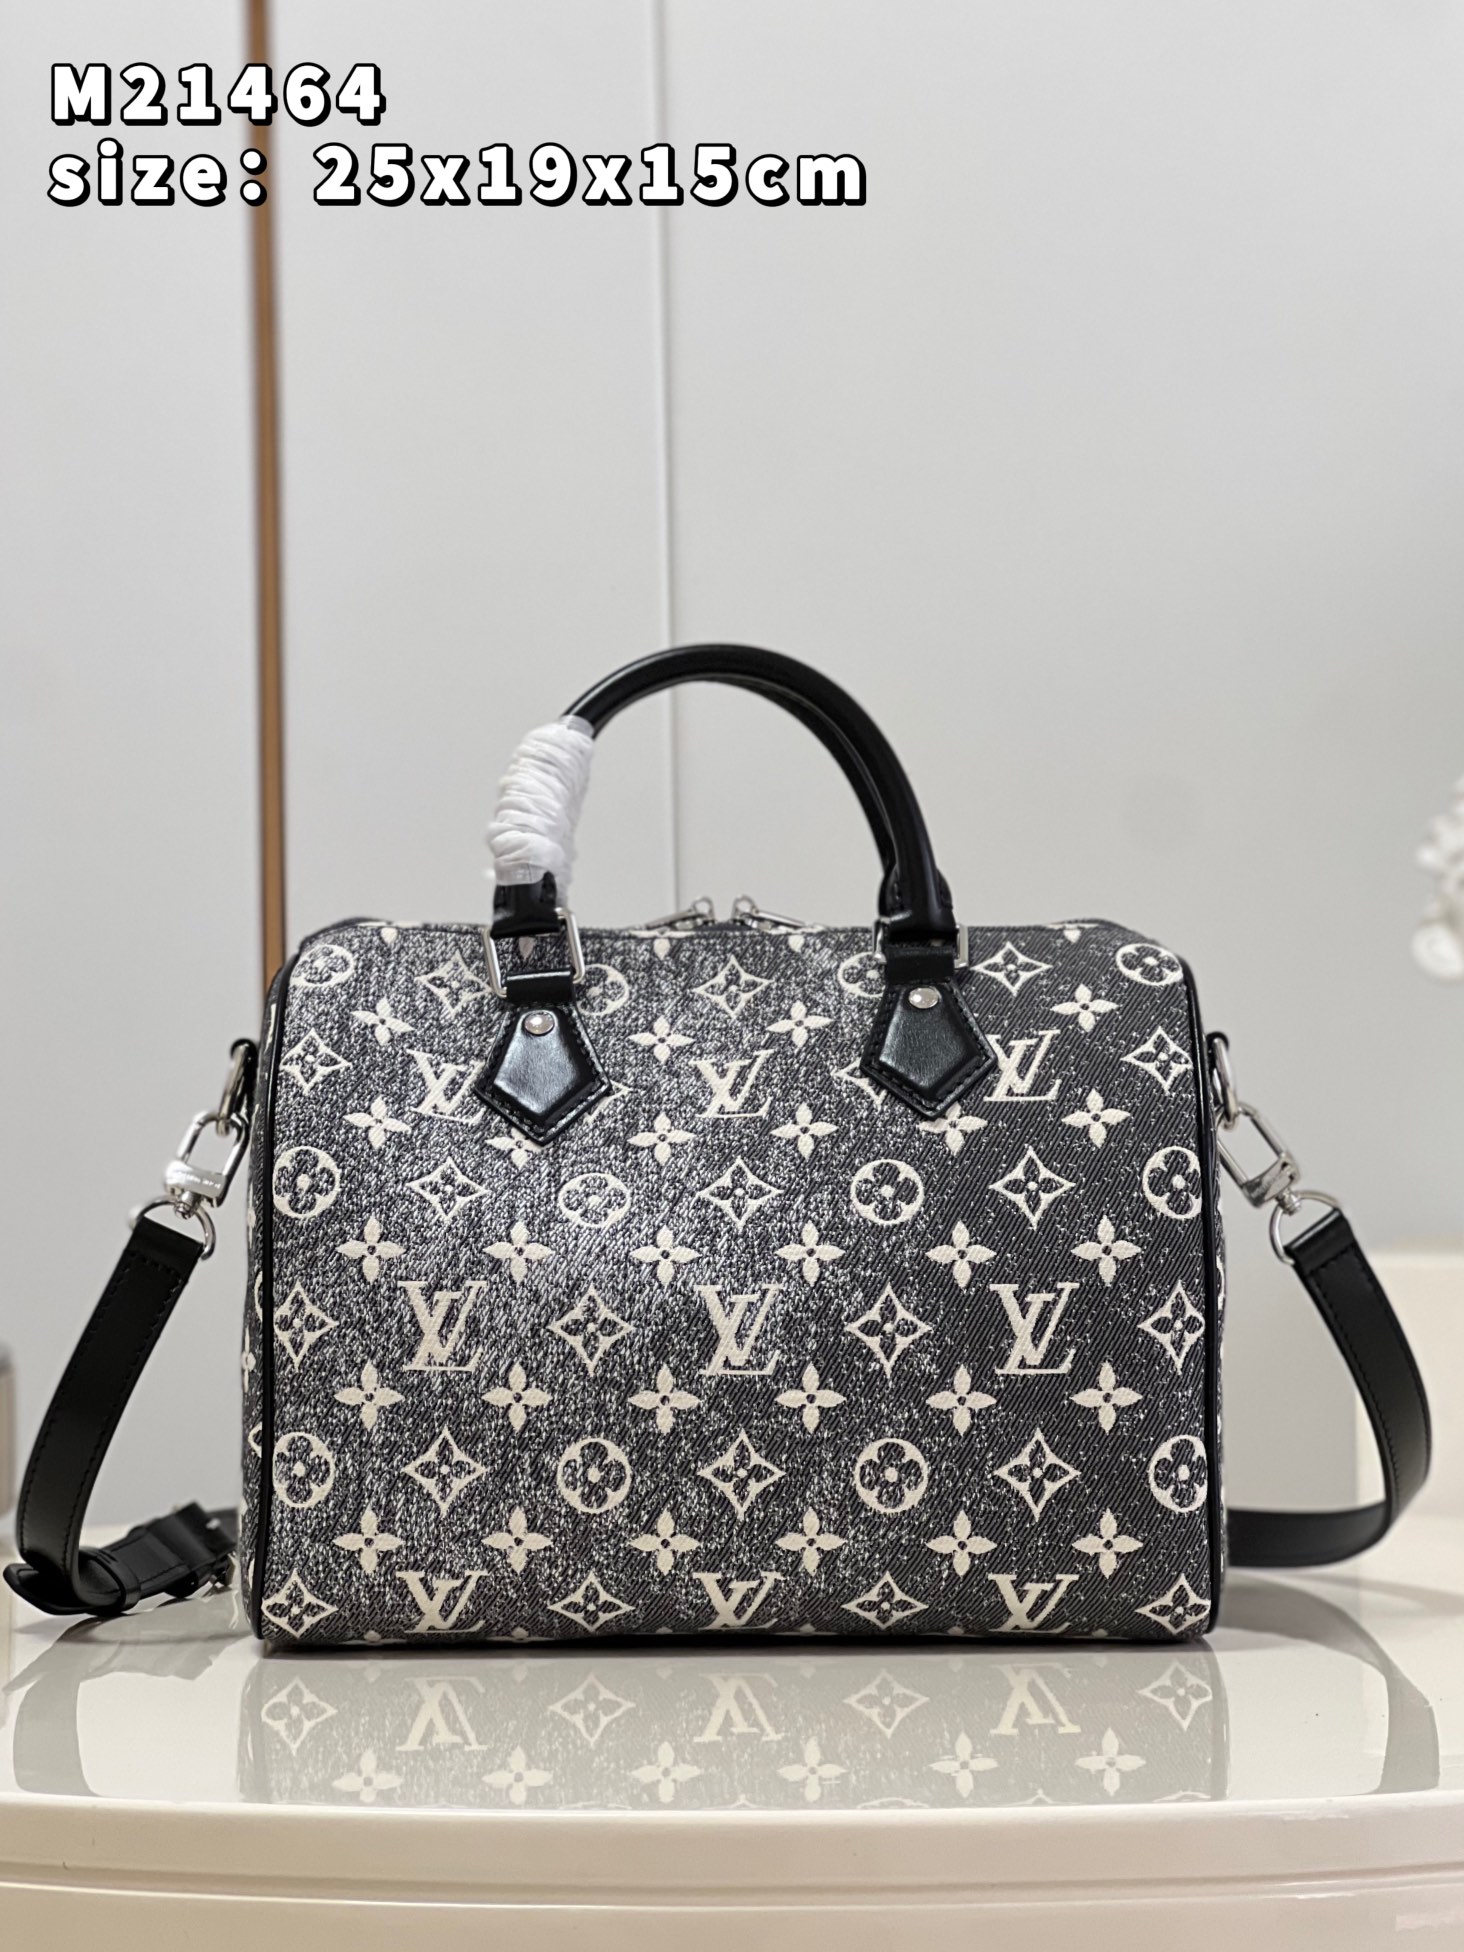 Louis Vuitton Speedy Bandouliere 25 Handbag Denim Textile Jacquard Gray M21464